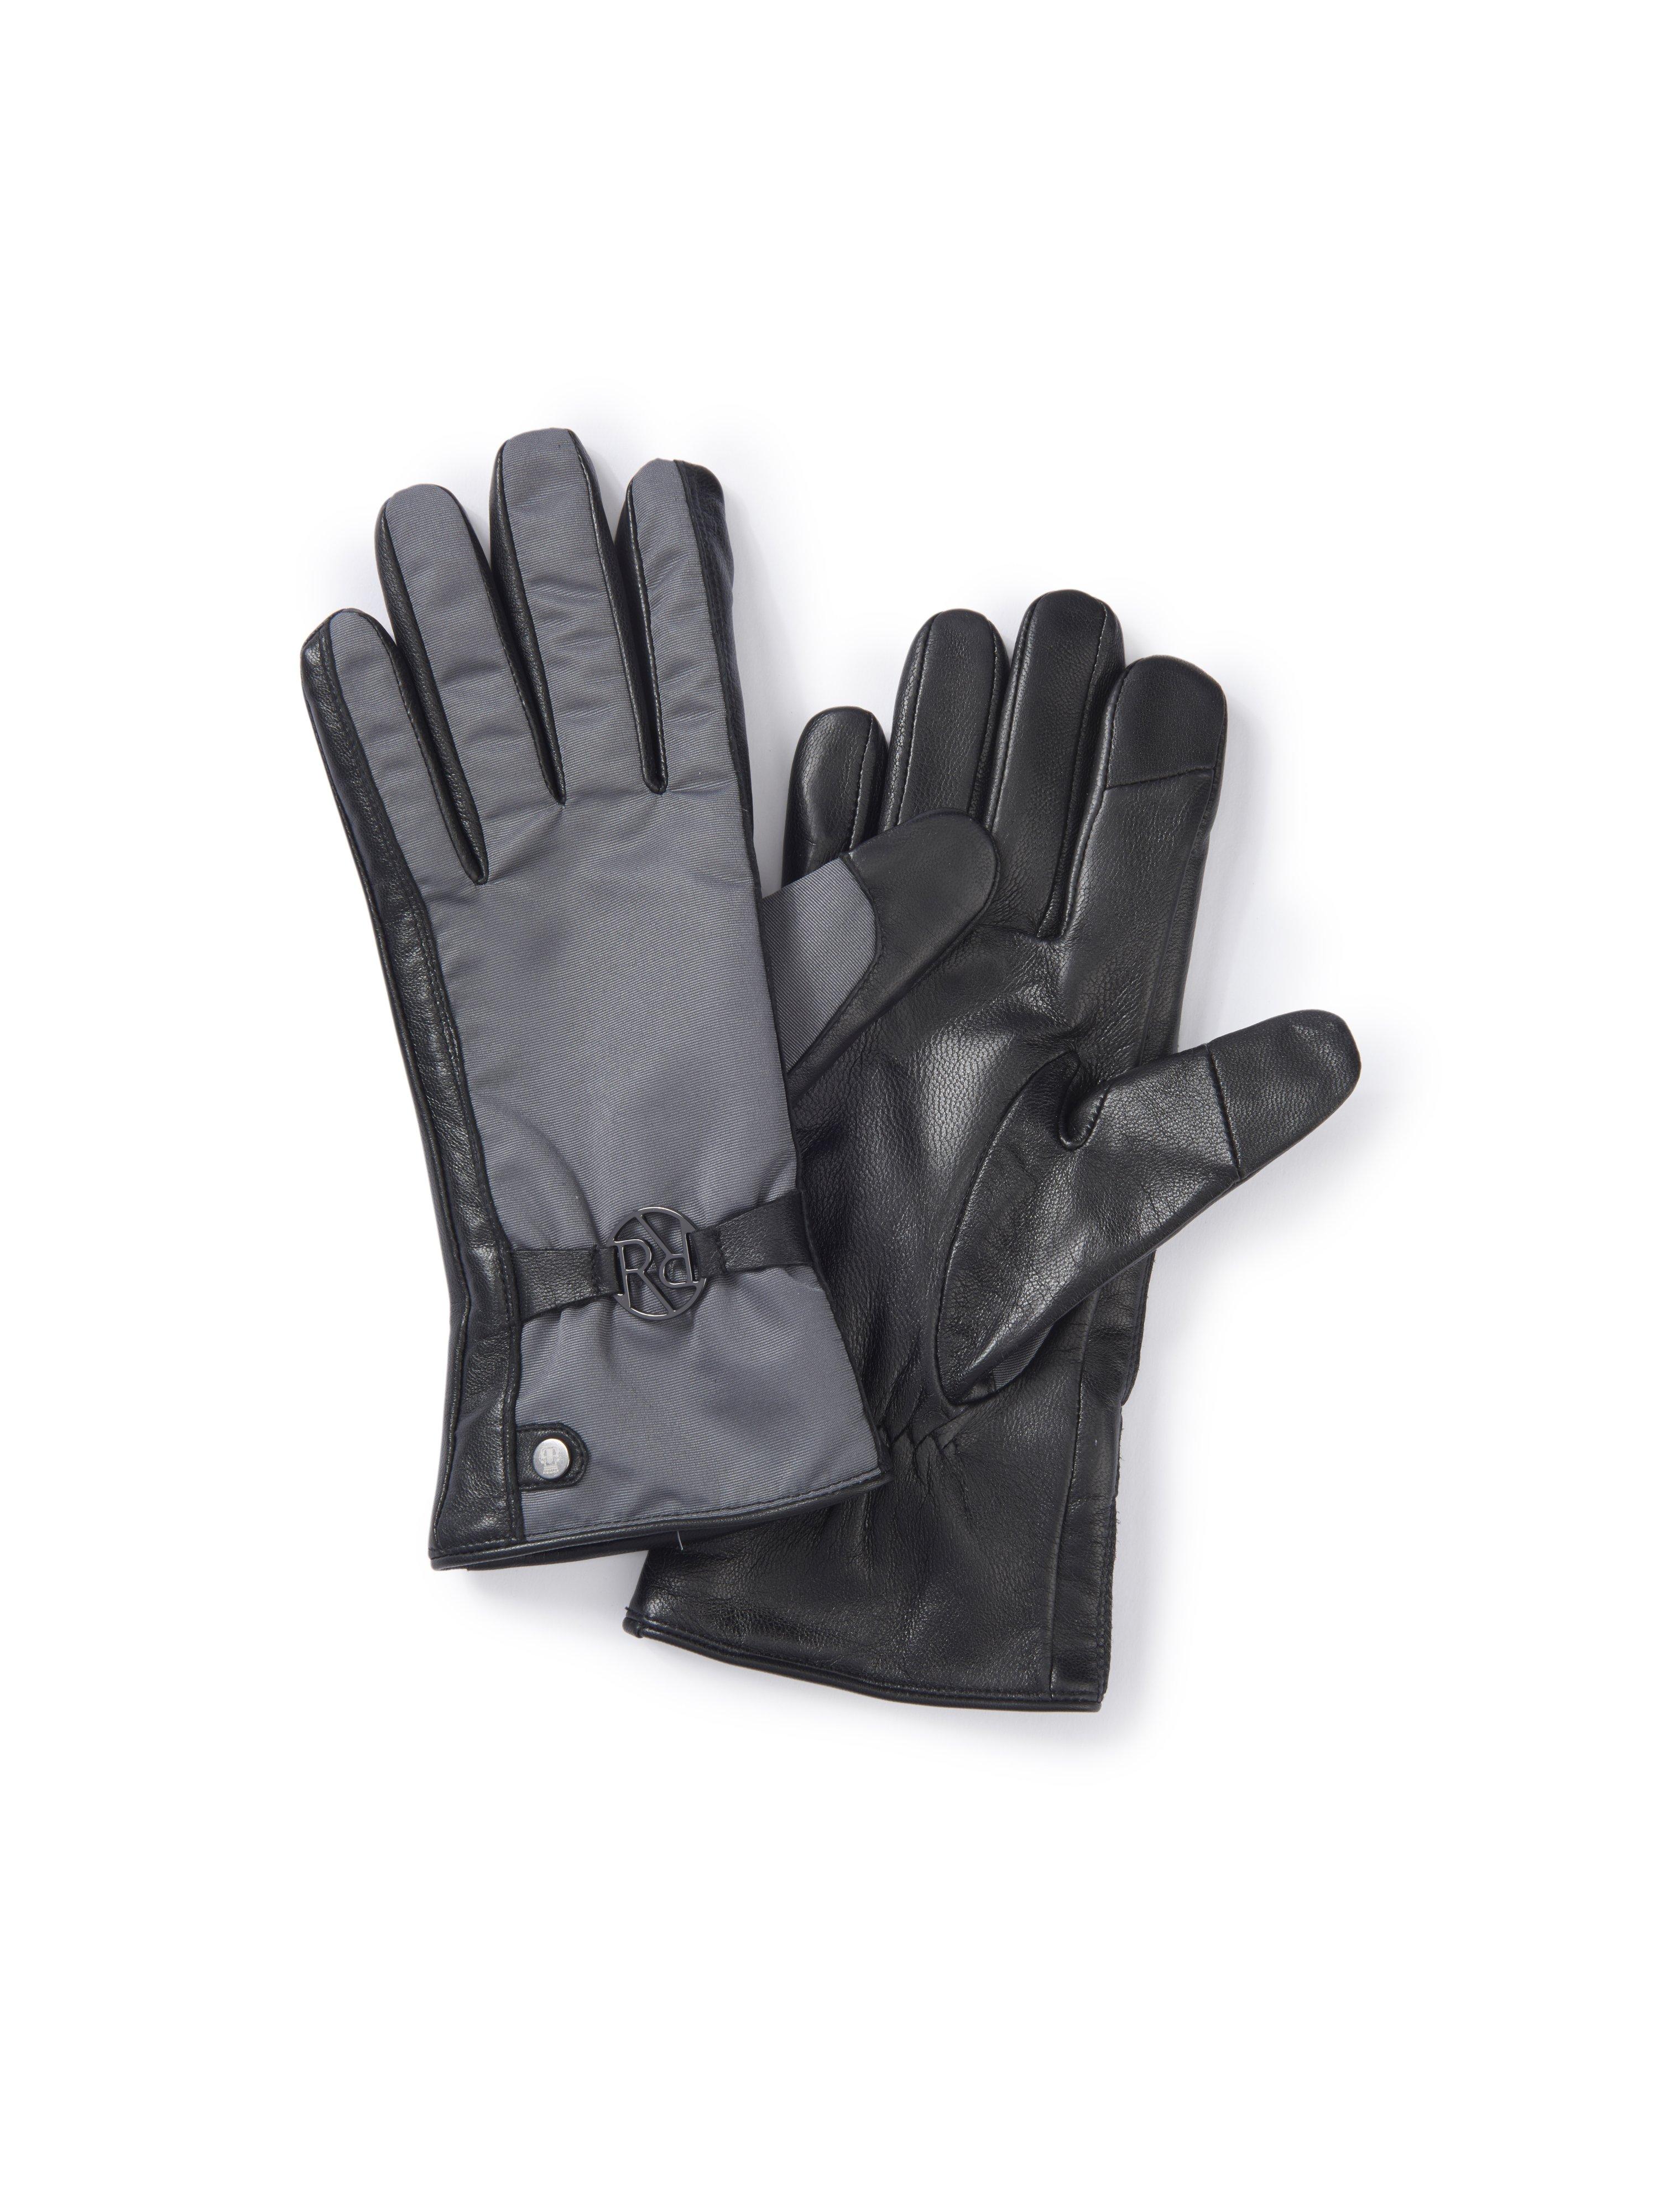 Roeckl - Les gants 100% nylon